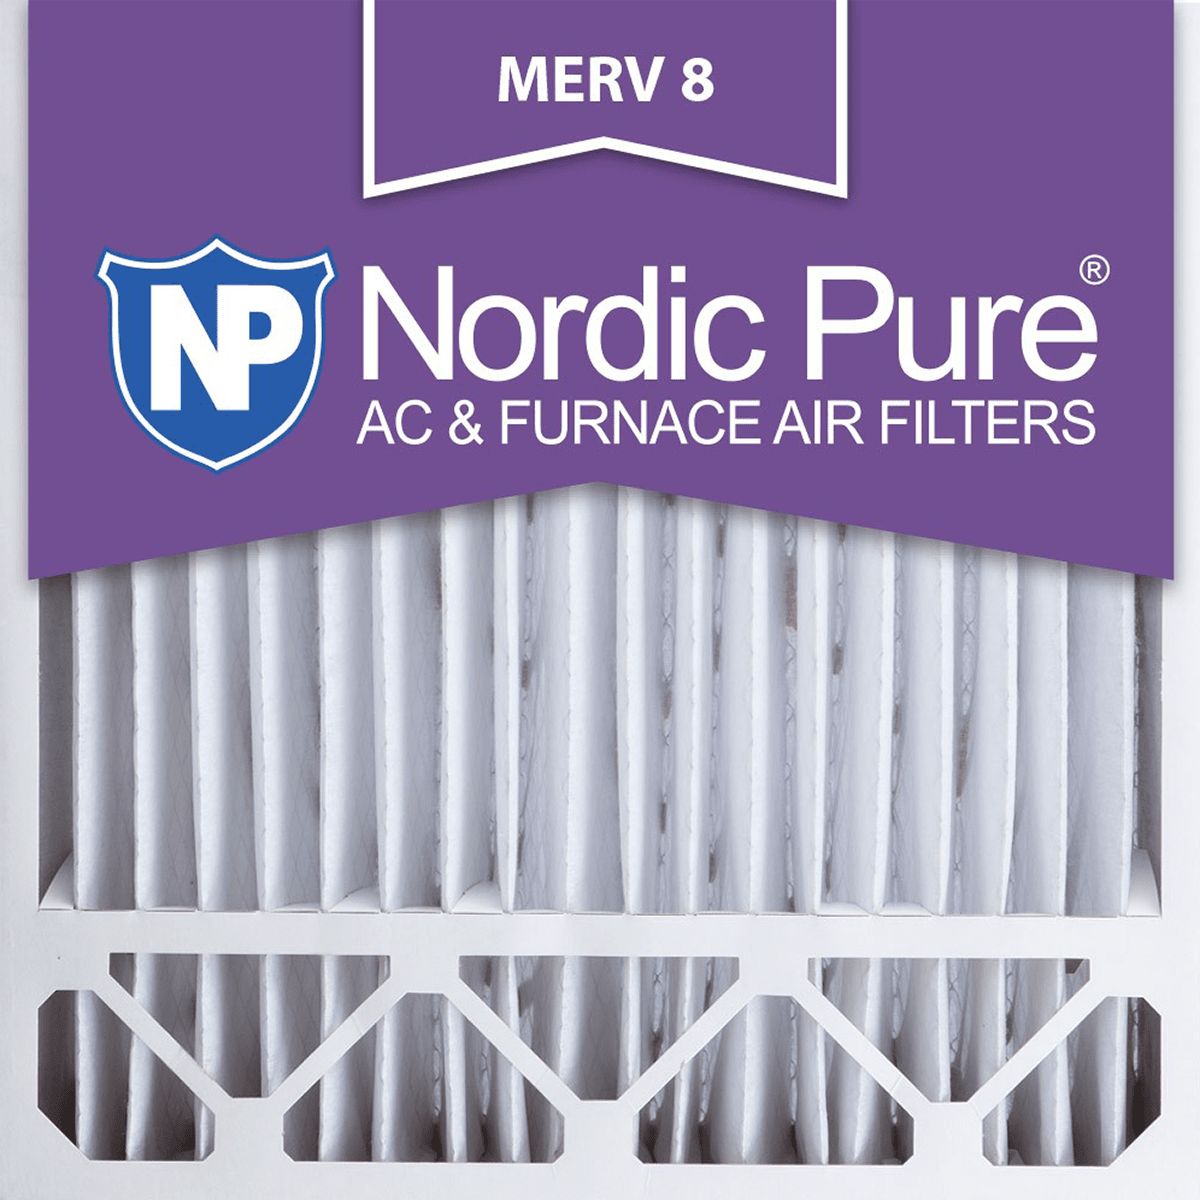 Nordic Pure Merv 8 Pleated Furnace Filter 20x20x5 (20x20x5hm8-1)